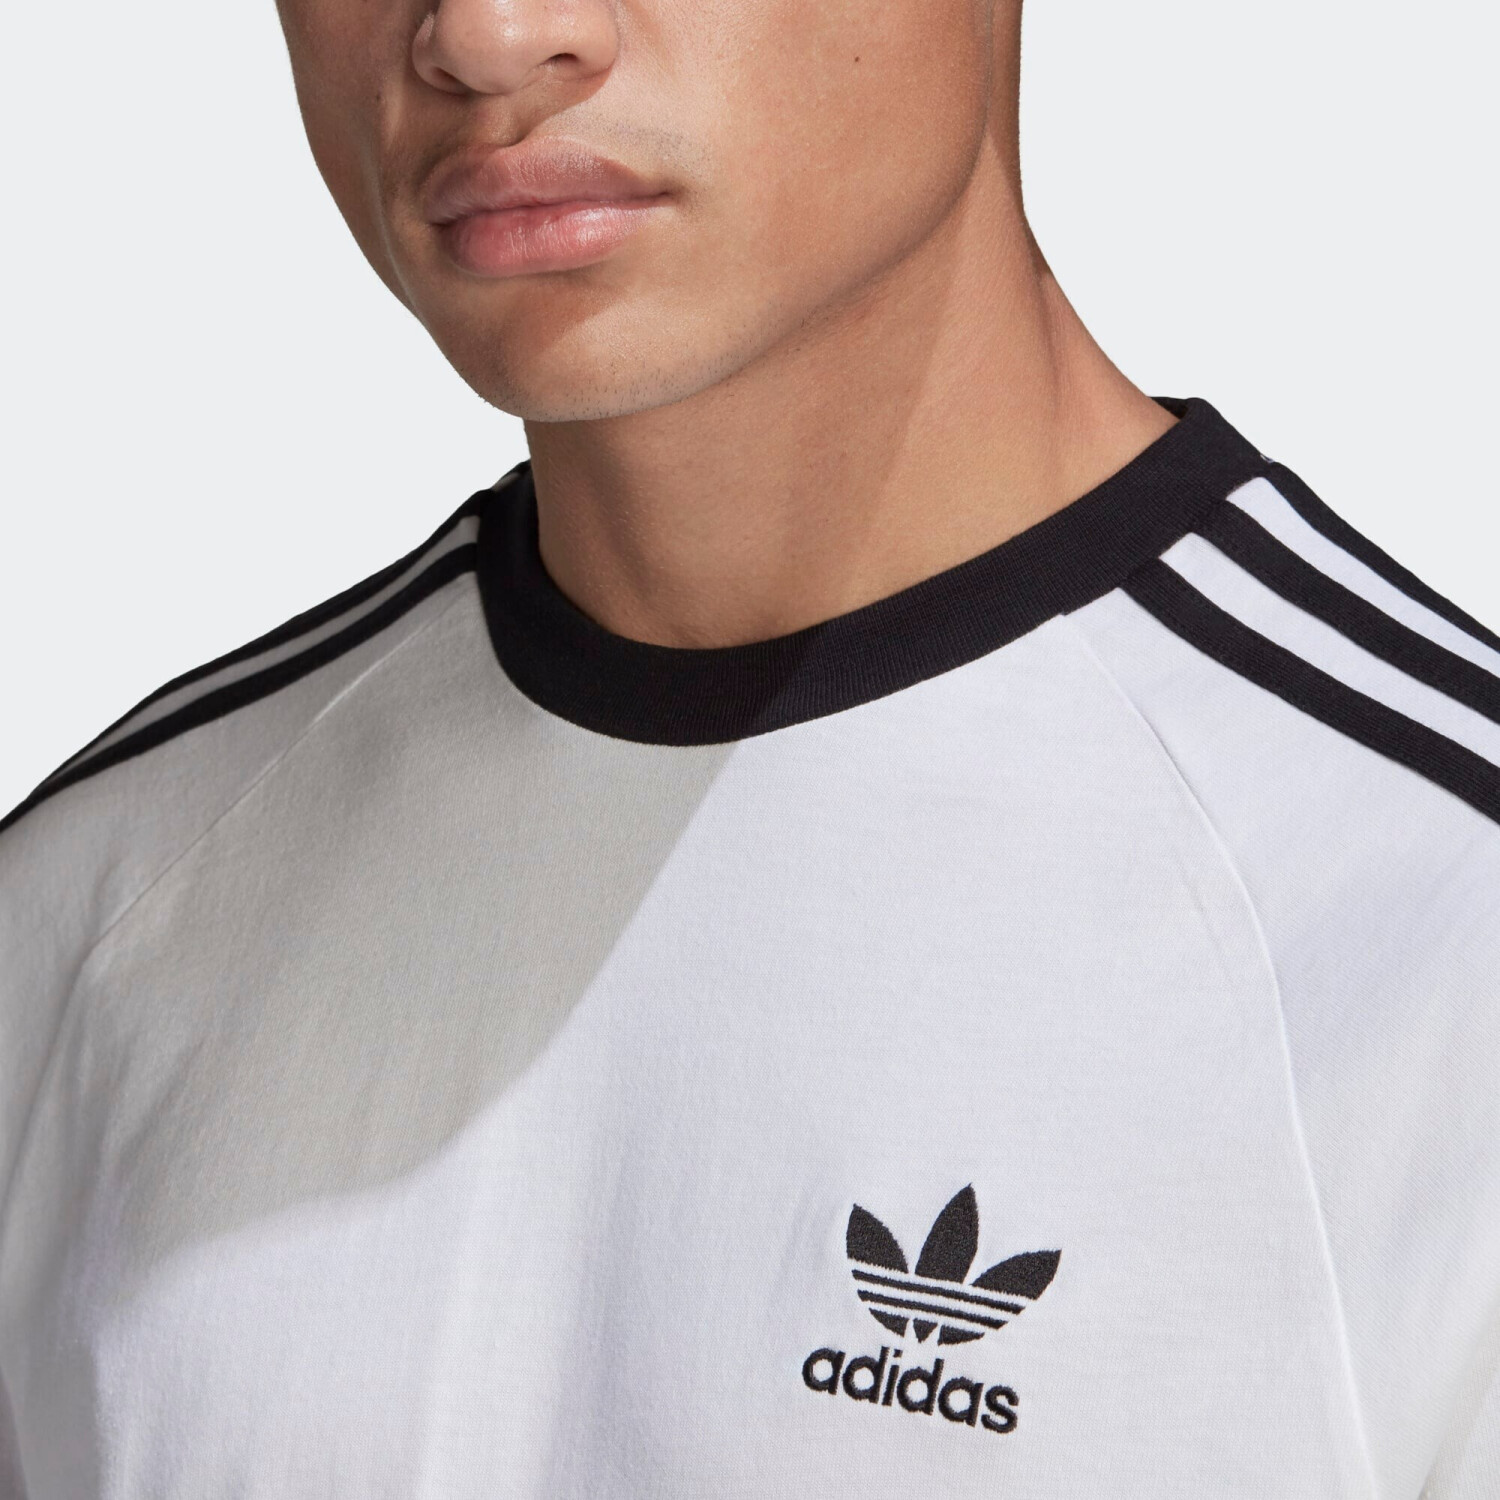 Adidas Adicolor Classics 3-Stripes Longsleeve bei Preisvergleich white 28,76 ab € 